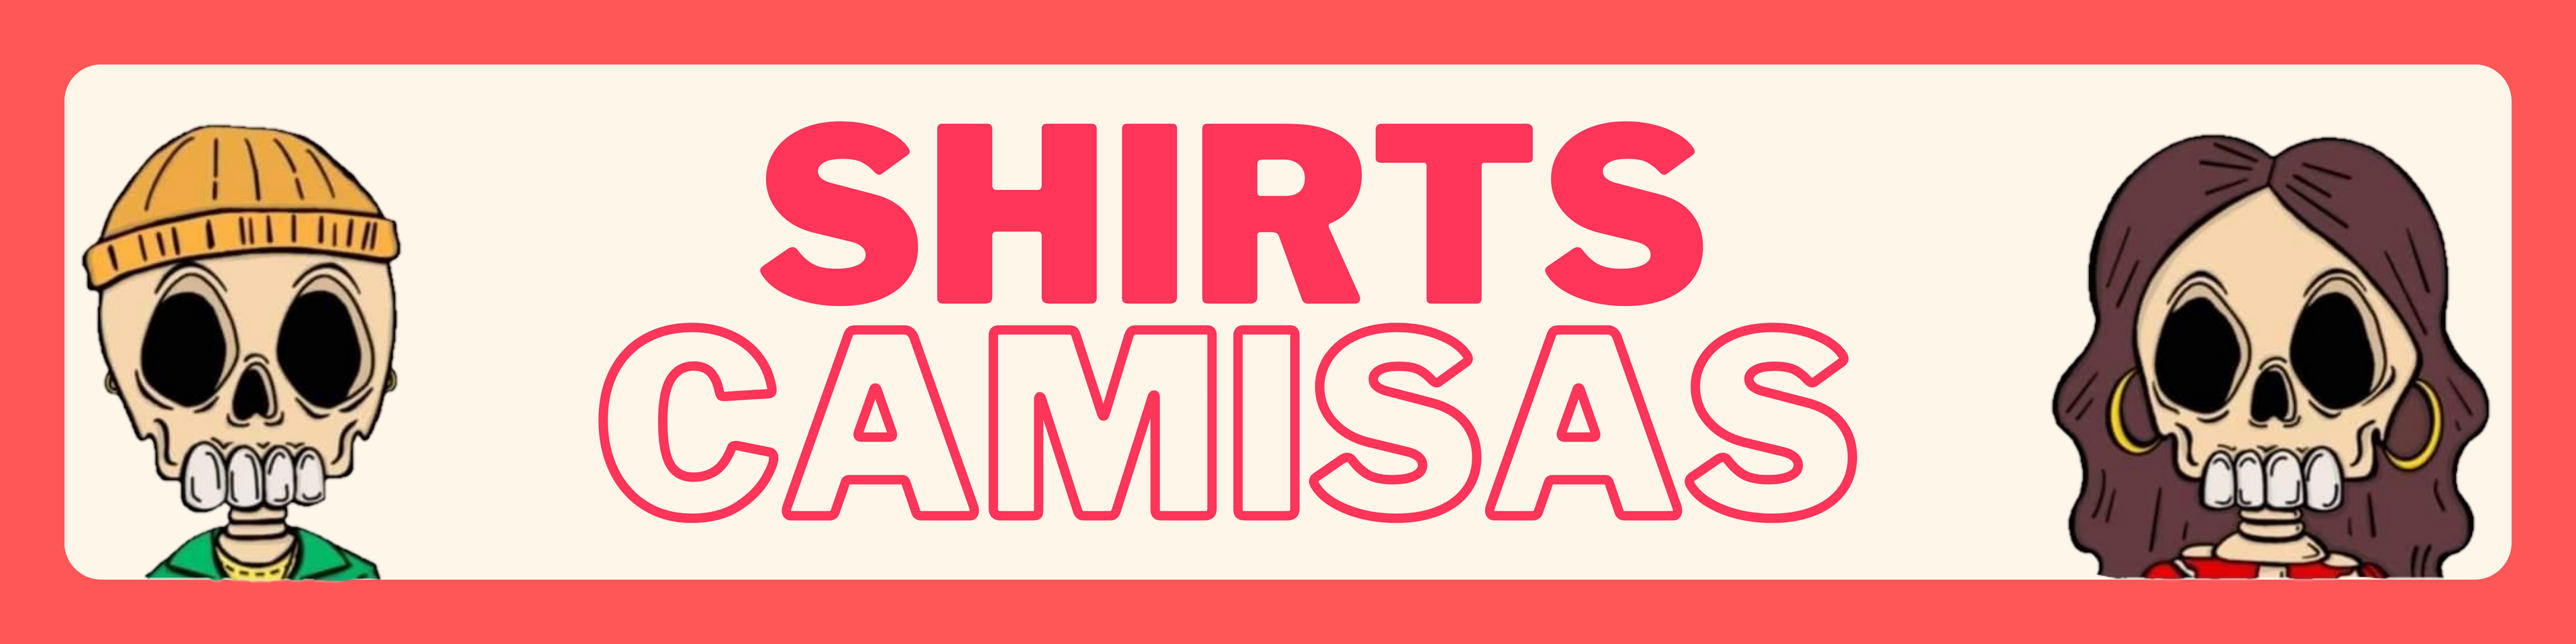 Shirts / Camisas